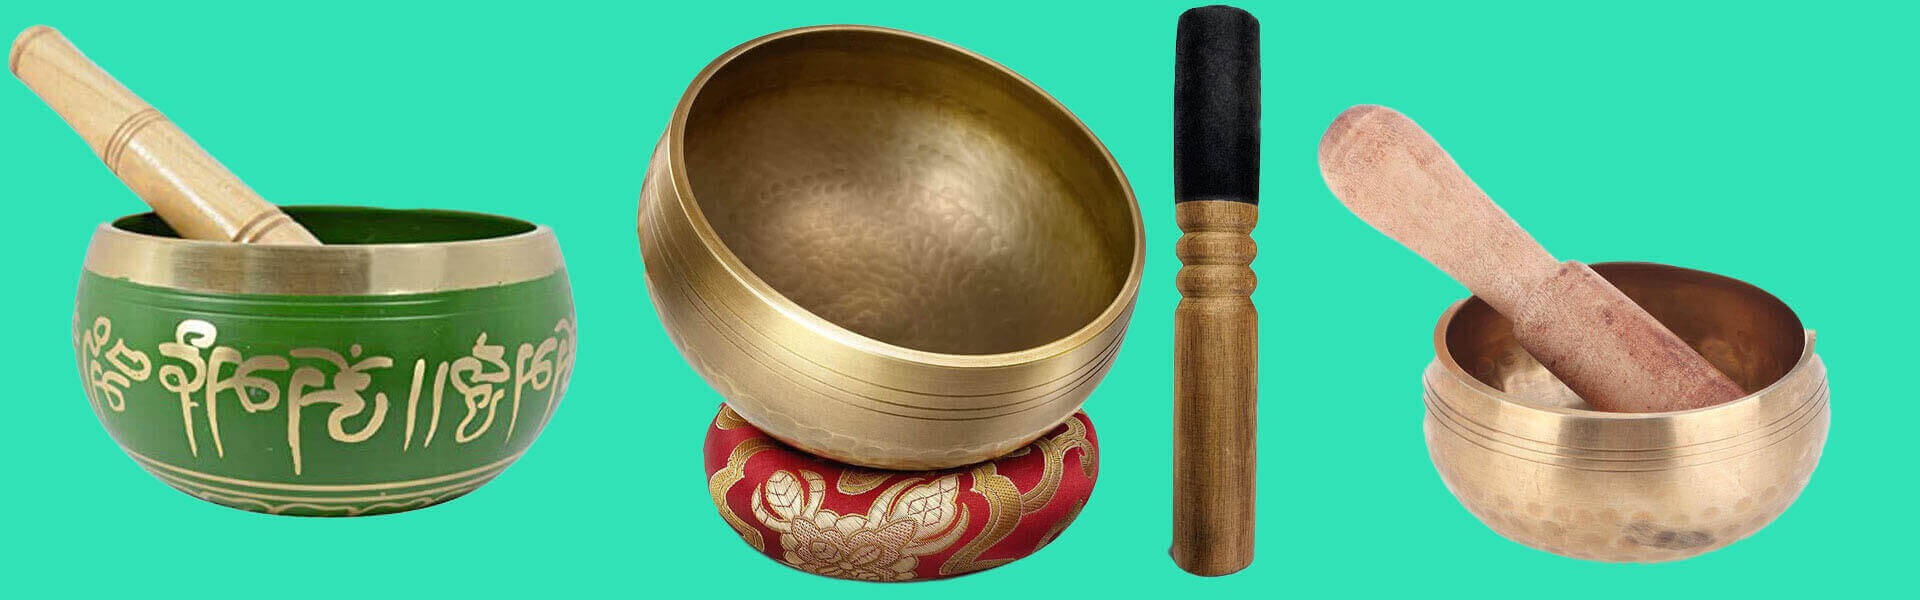 Nepal singing bowls Product